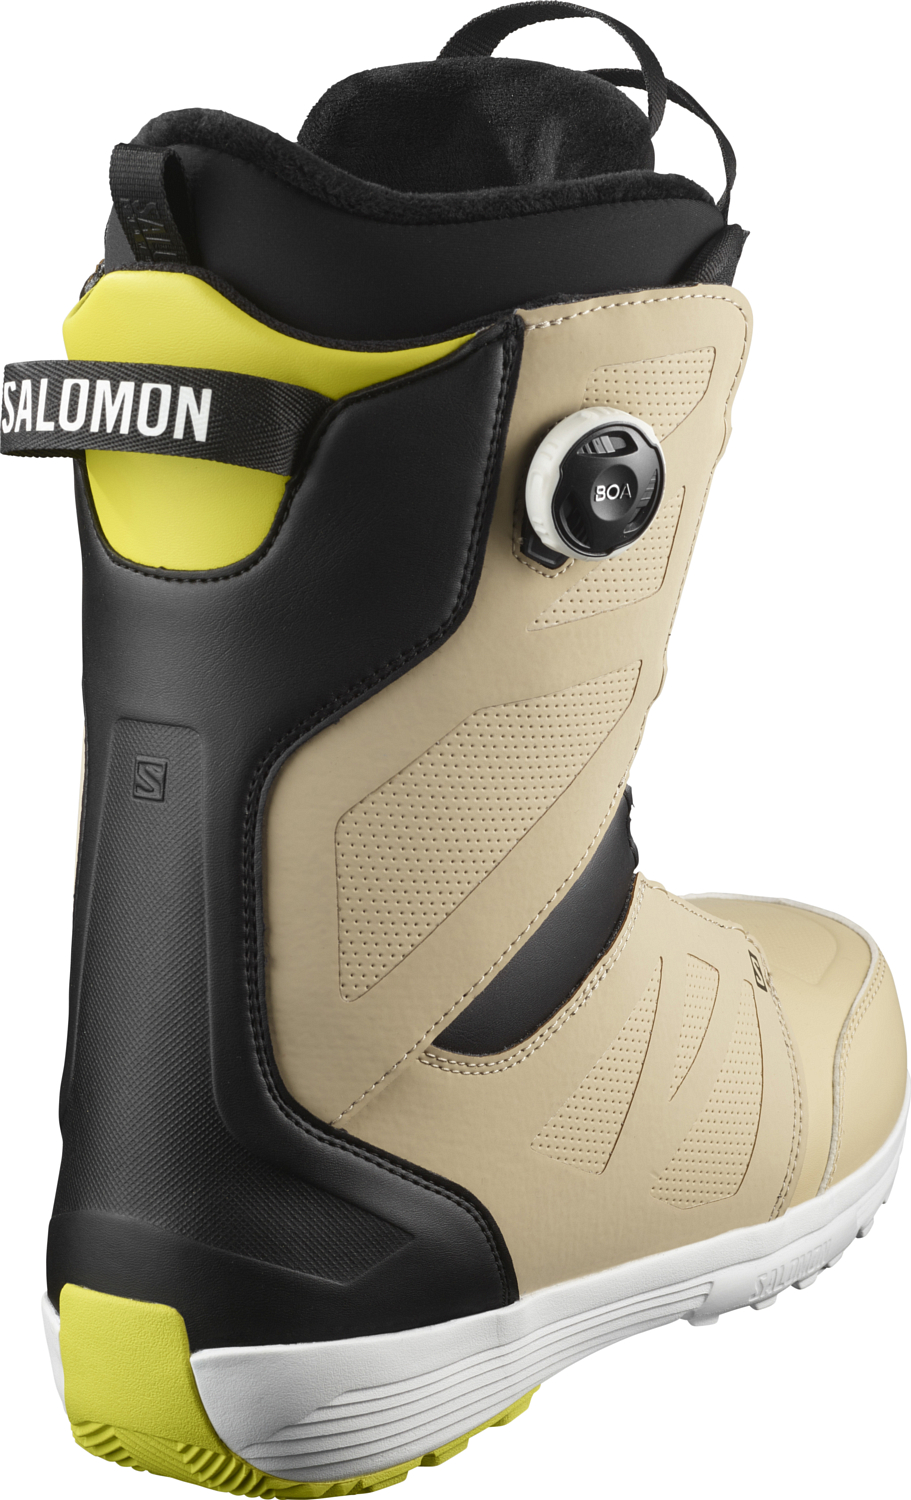 Ботинки для сноуборда SALOMON 2021-22 Launch Boa Sj Safa/Black